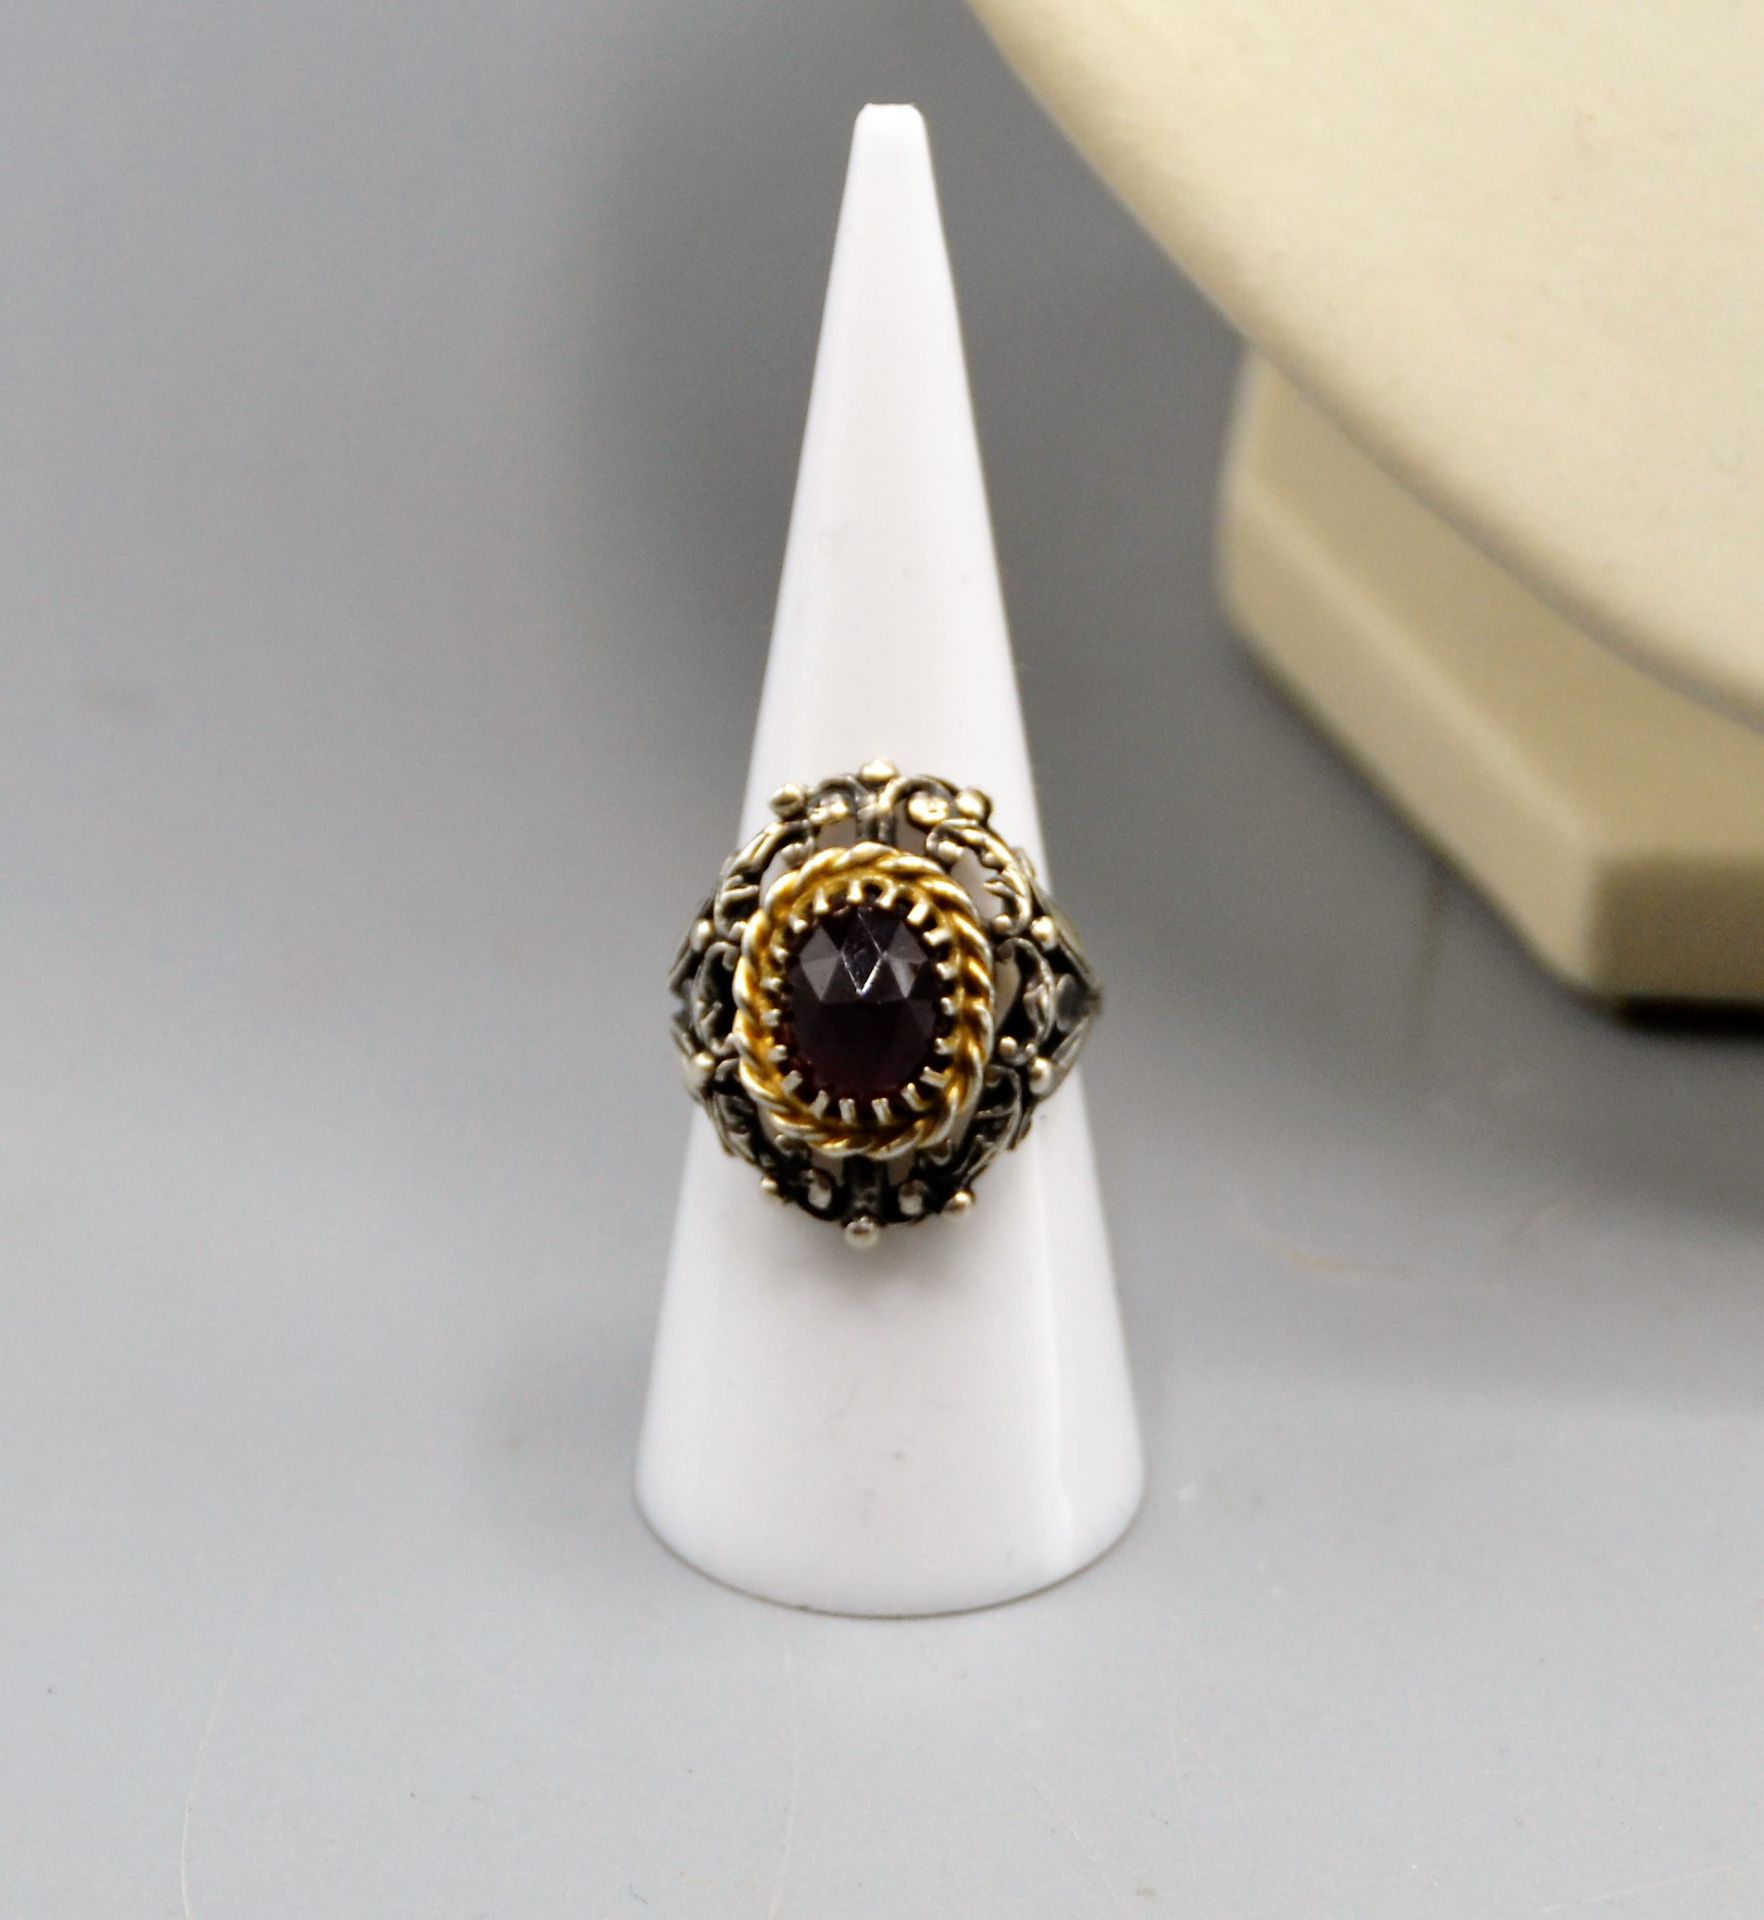 Granat Silber Trachtenschmuck Set Collier Ohrringe Ring, Collier ca. 41-43 cm, Ring Ø ca. 17 mm, al - Image 3 of 3